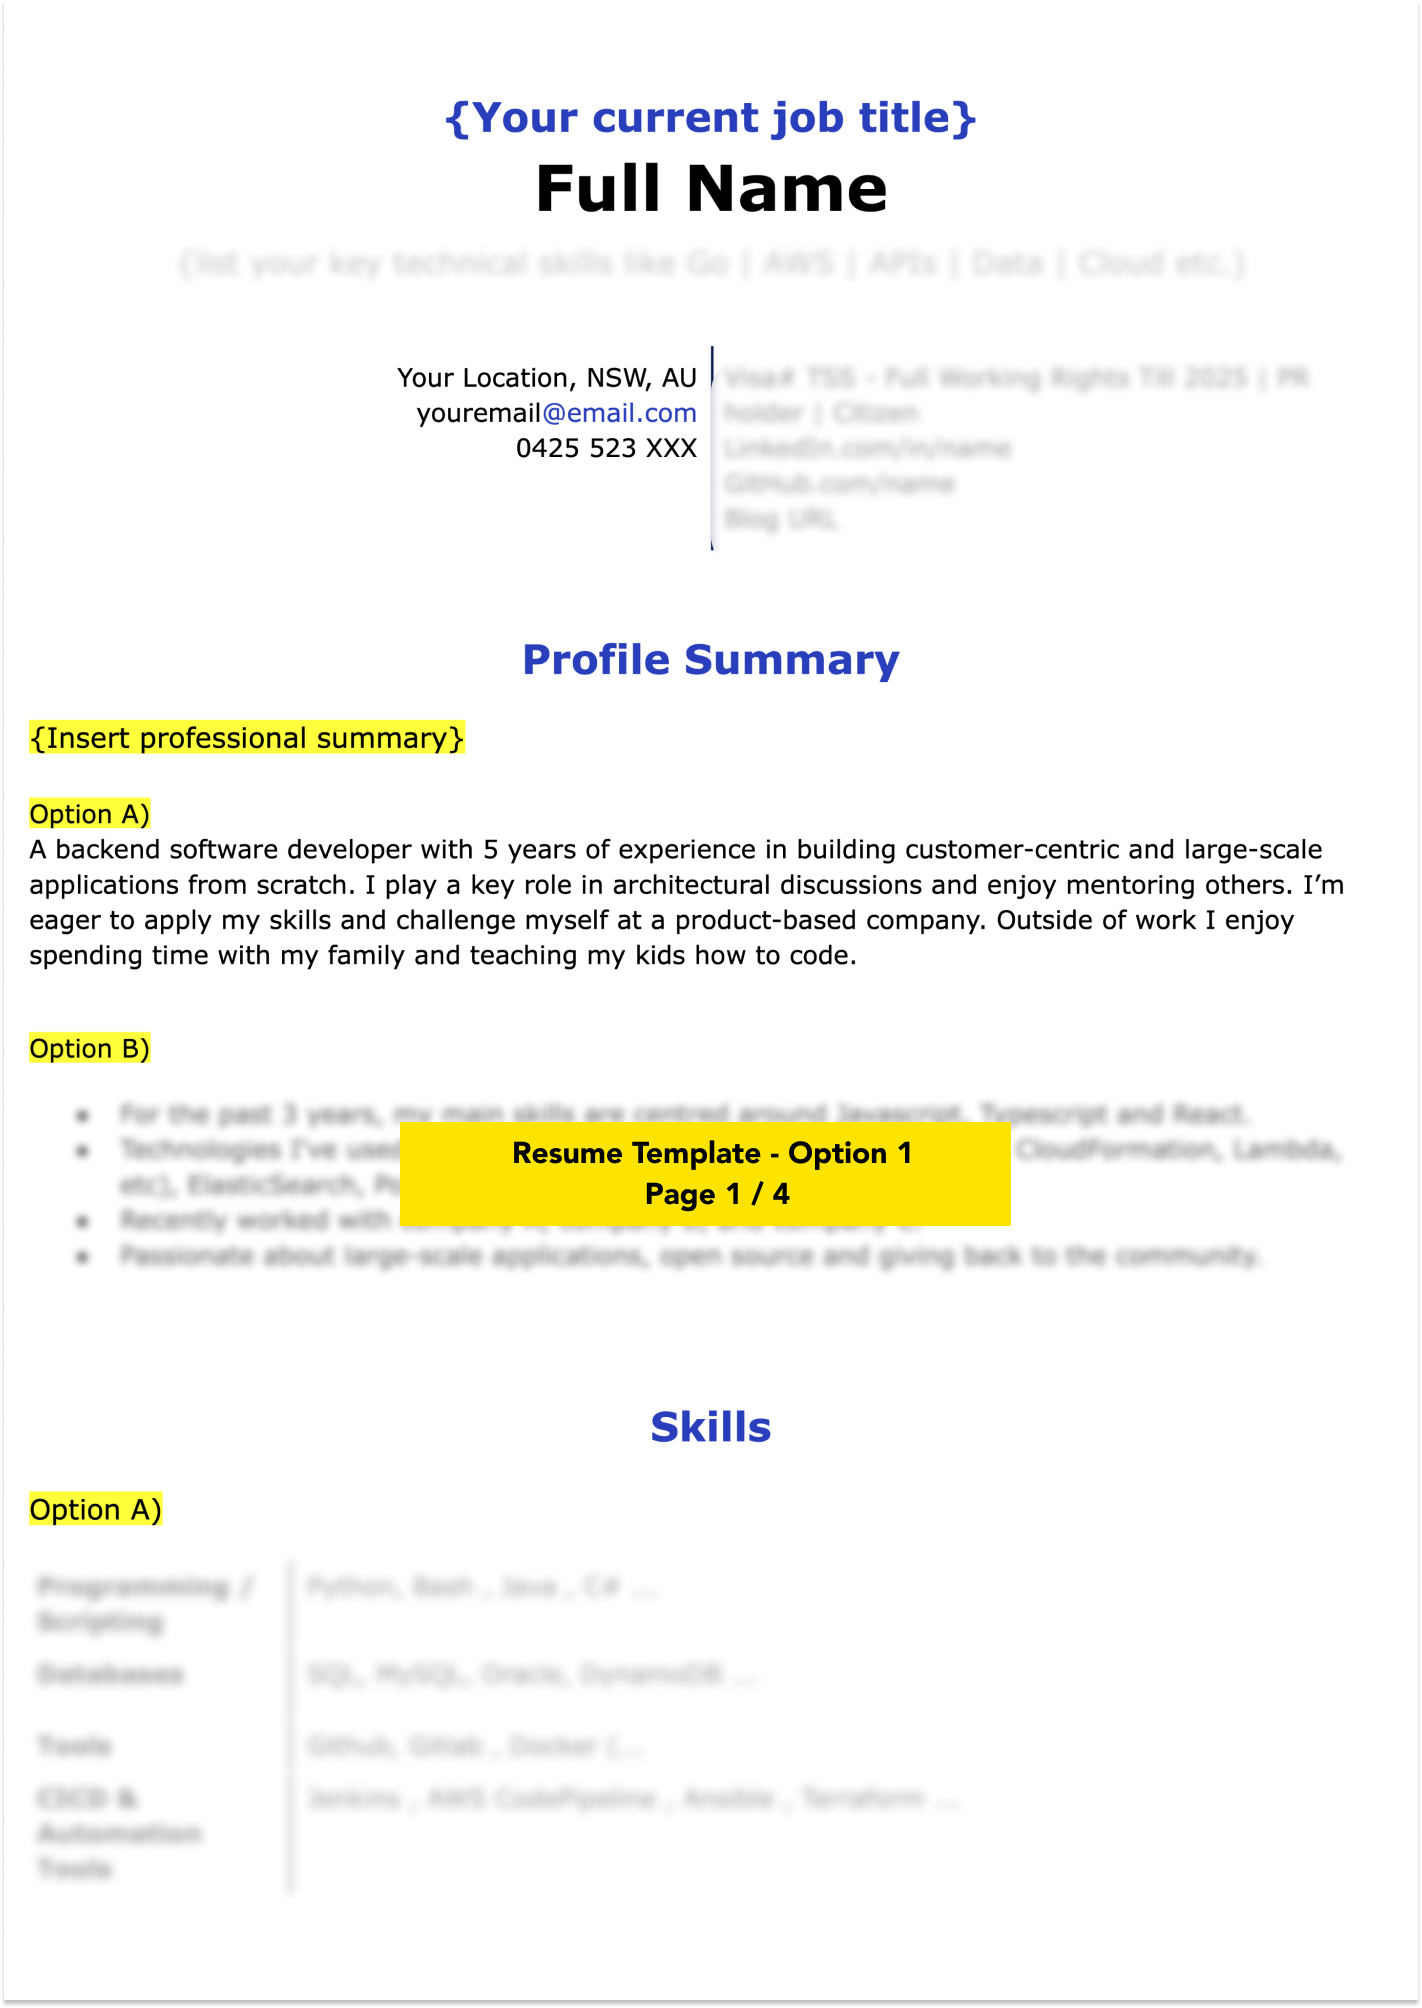 Tech Resume Templates & Handbook